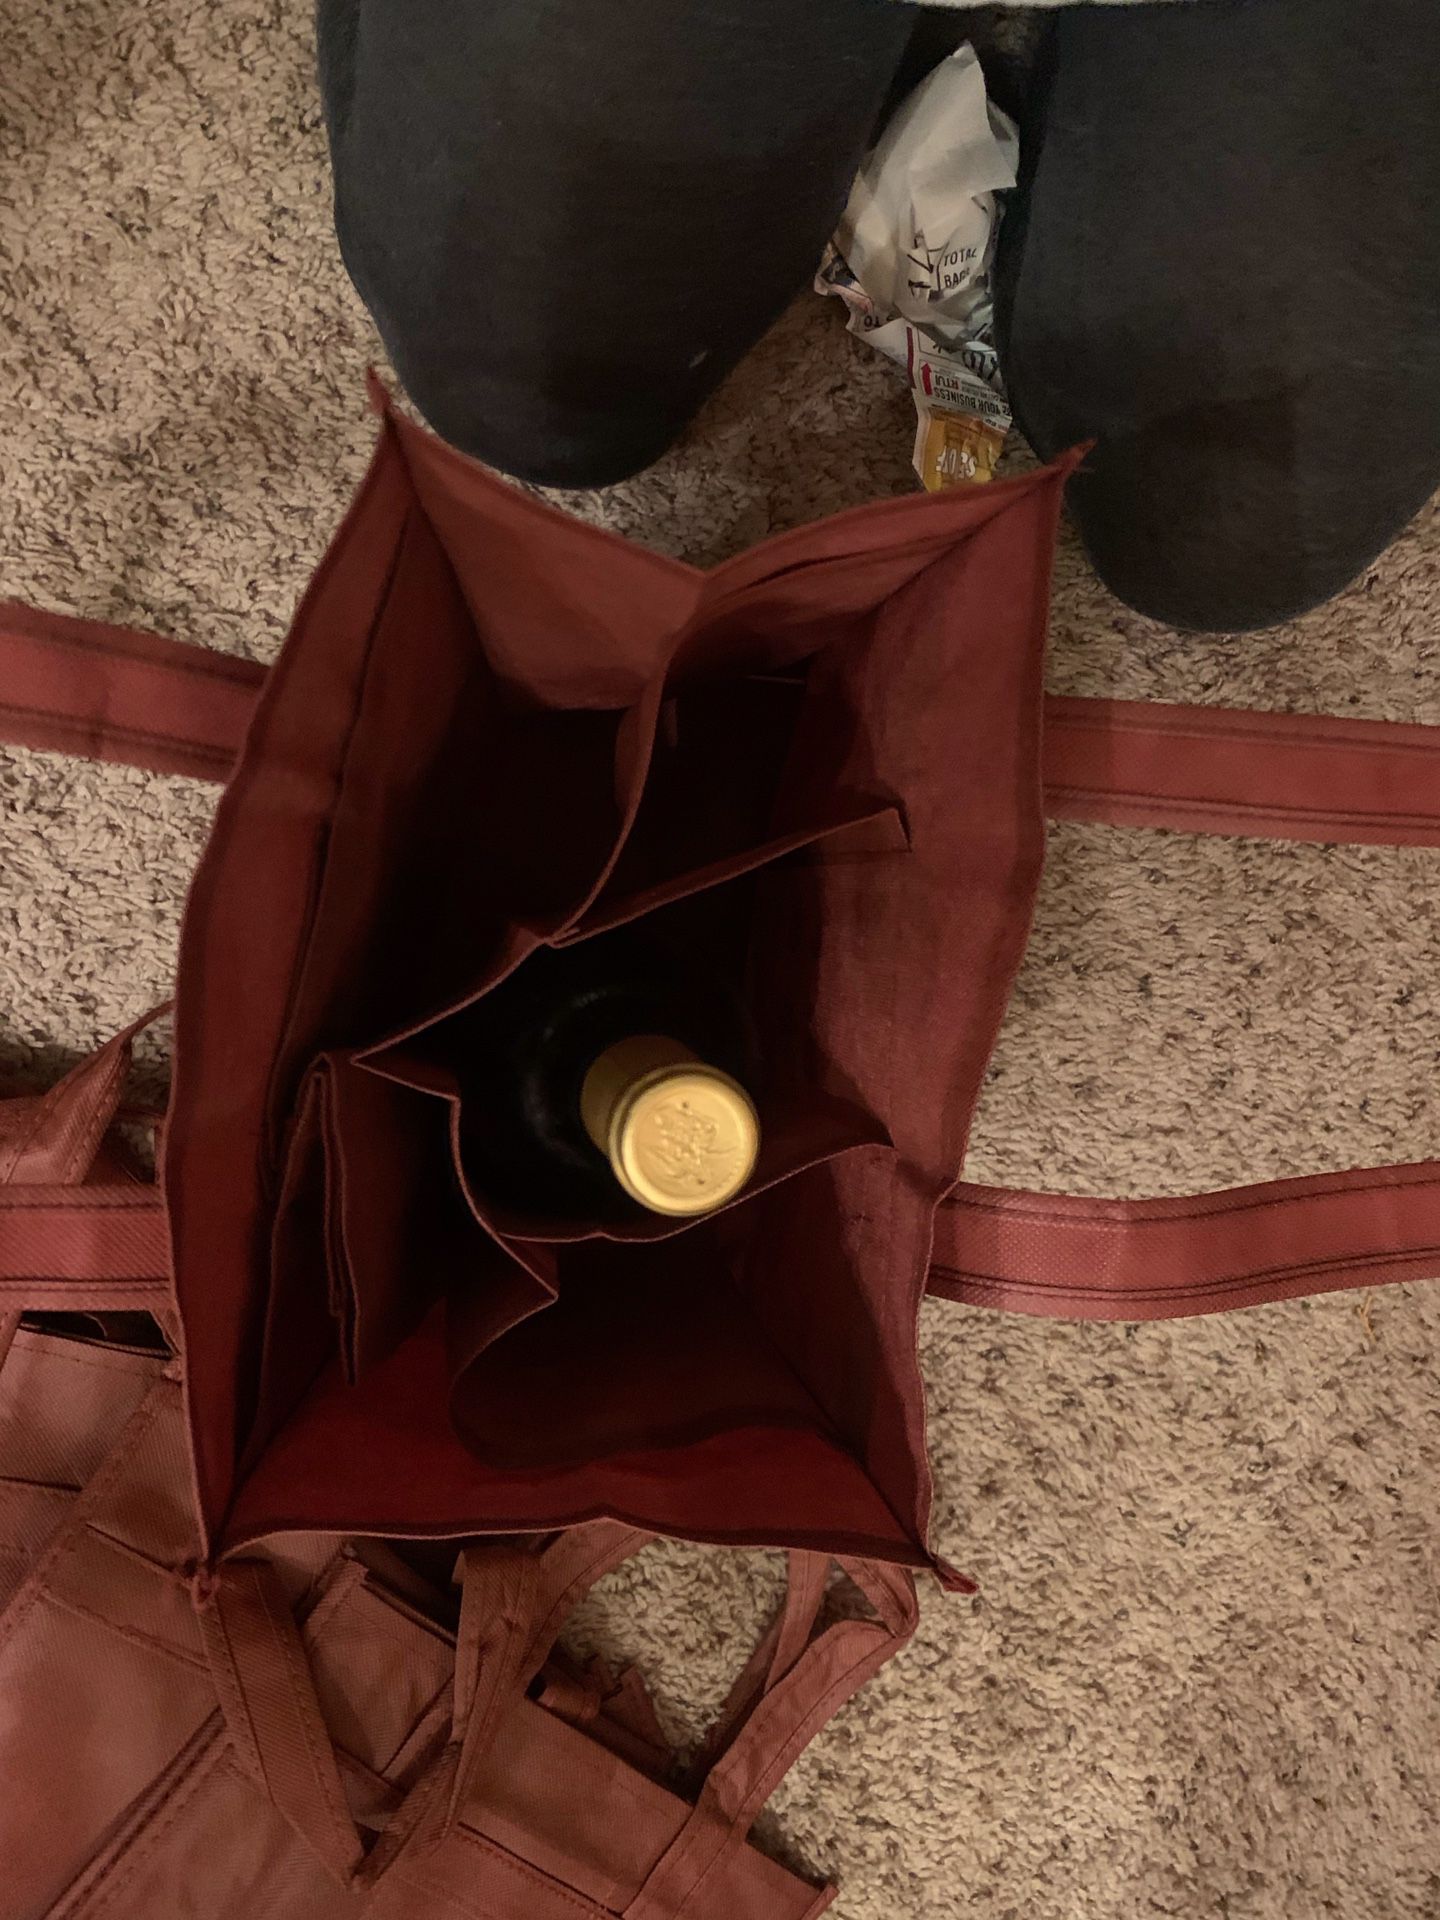 Free wine bags